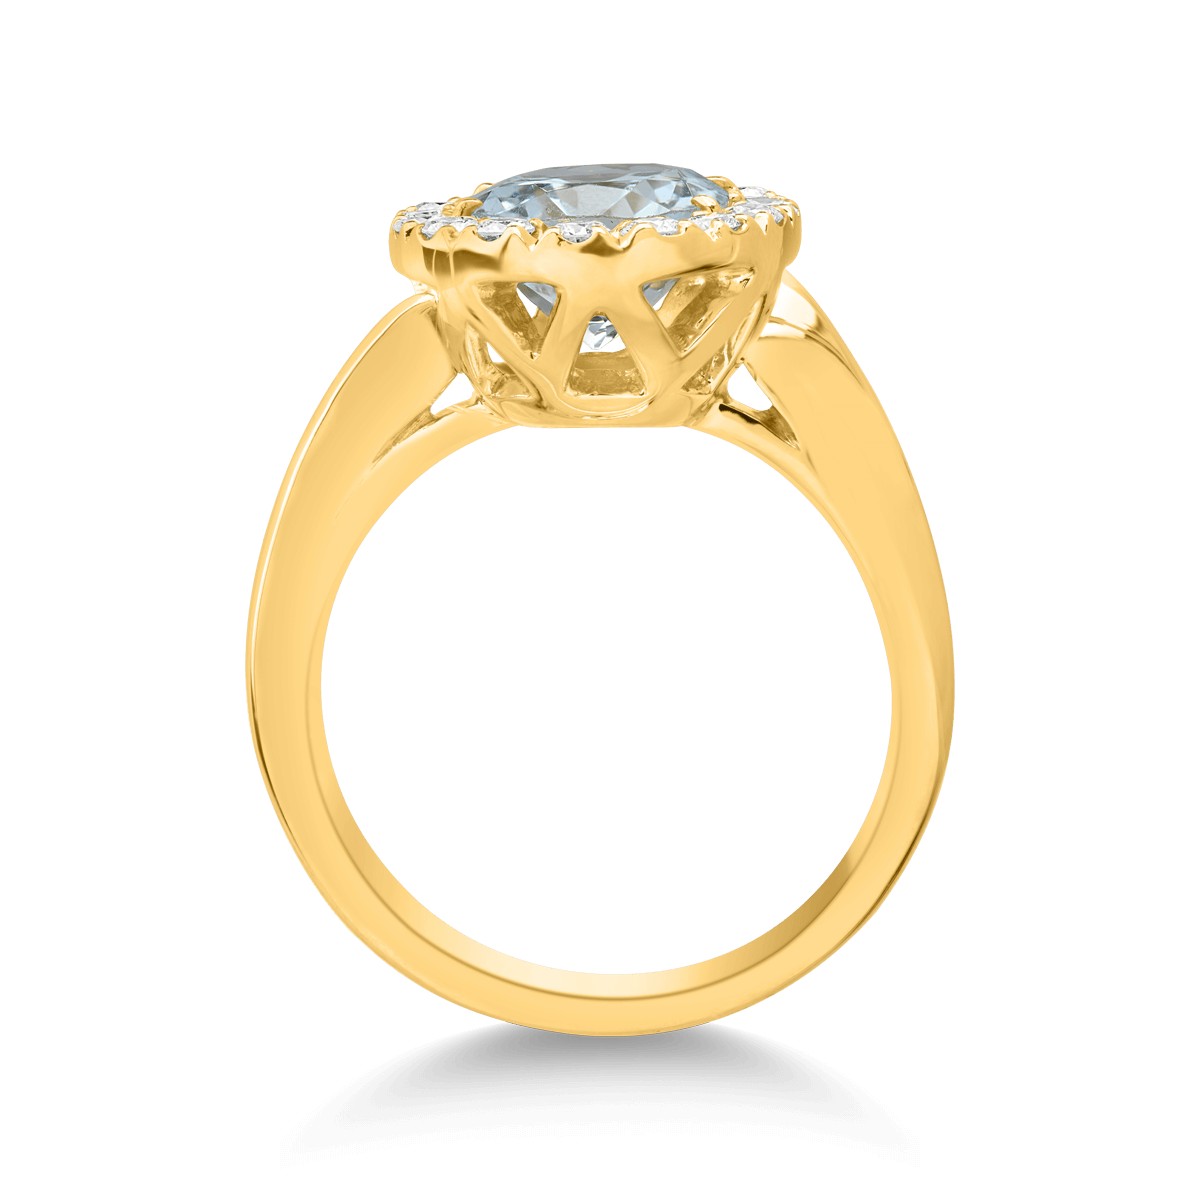 Inel din aur galben de 18K cu aquamarin de 2.42ct si diamante de 0.4ct